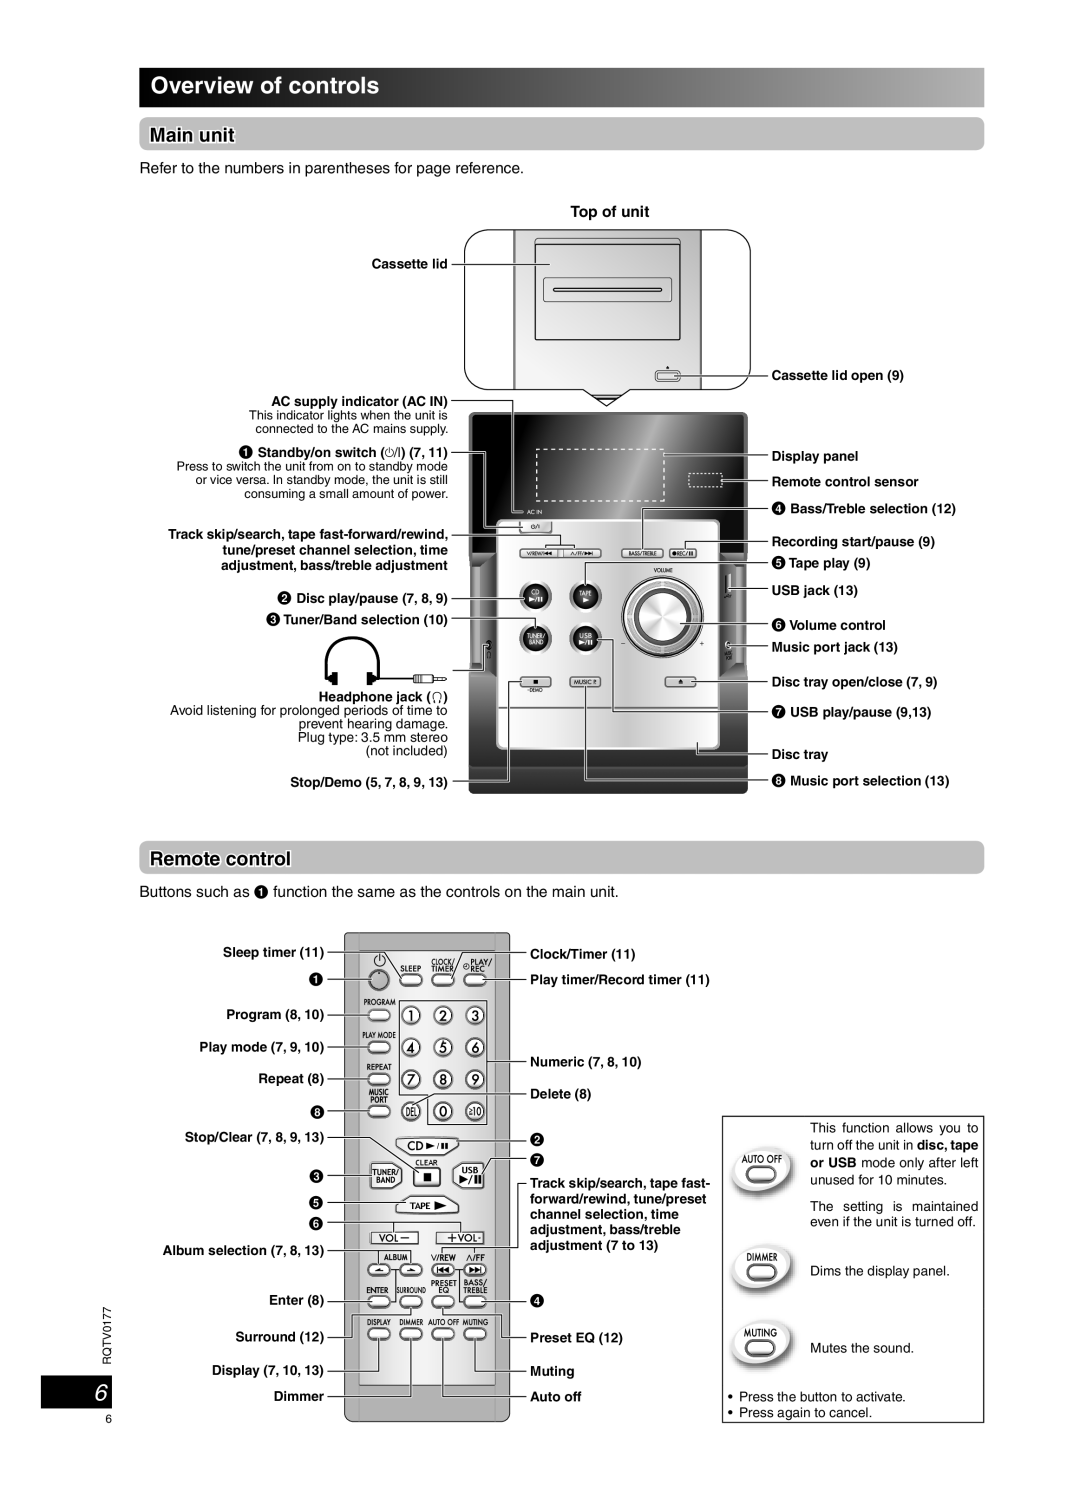 Panasonic SC-PM45 manual Overview of controls, Main unit, Remote control 